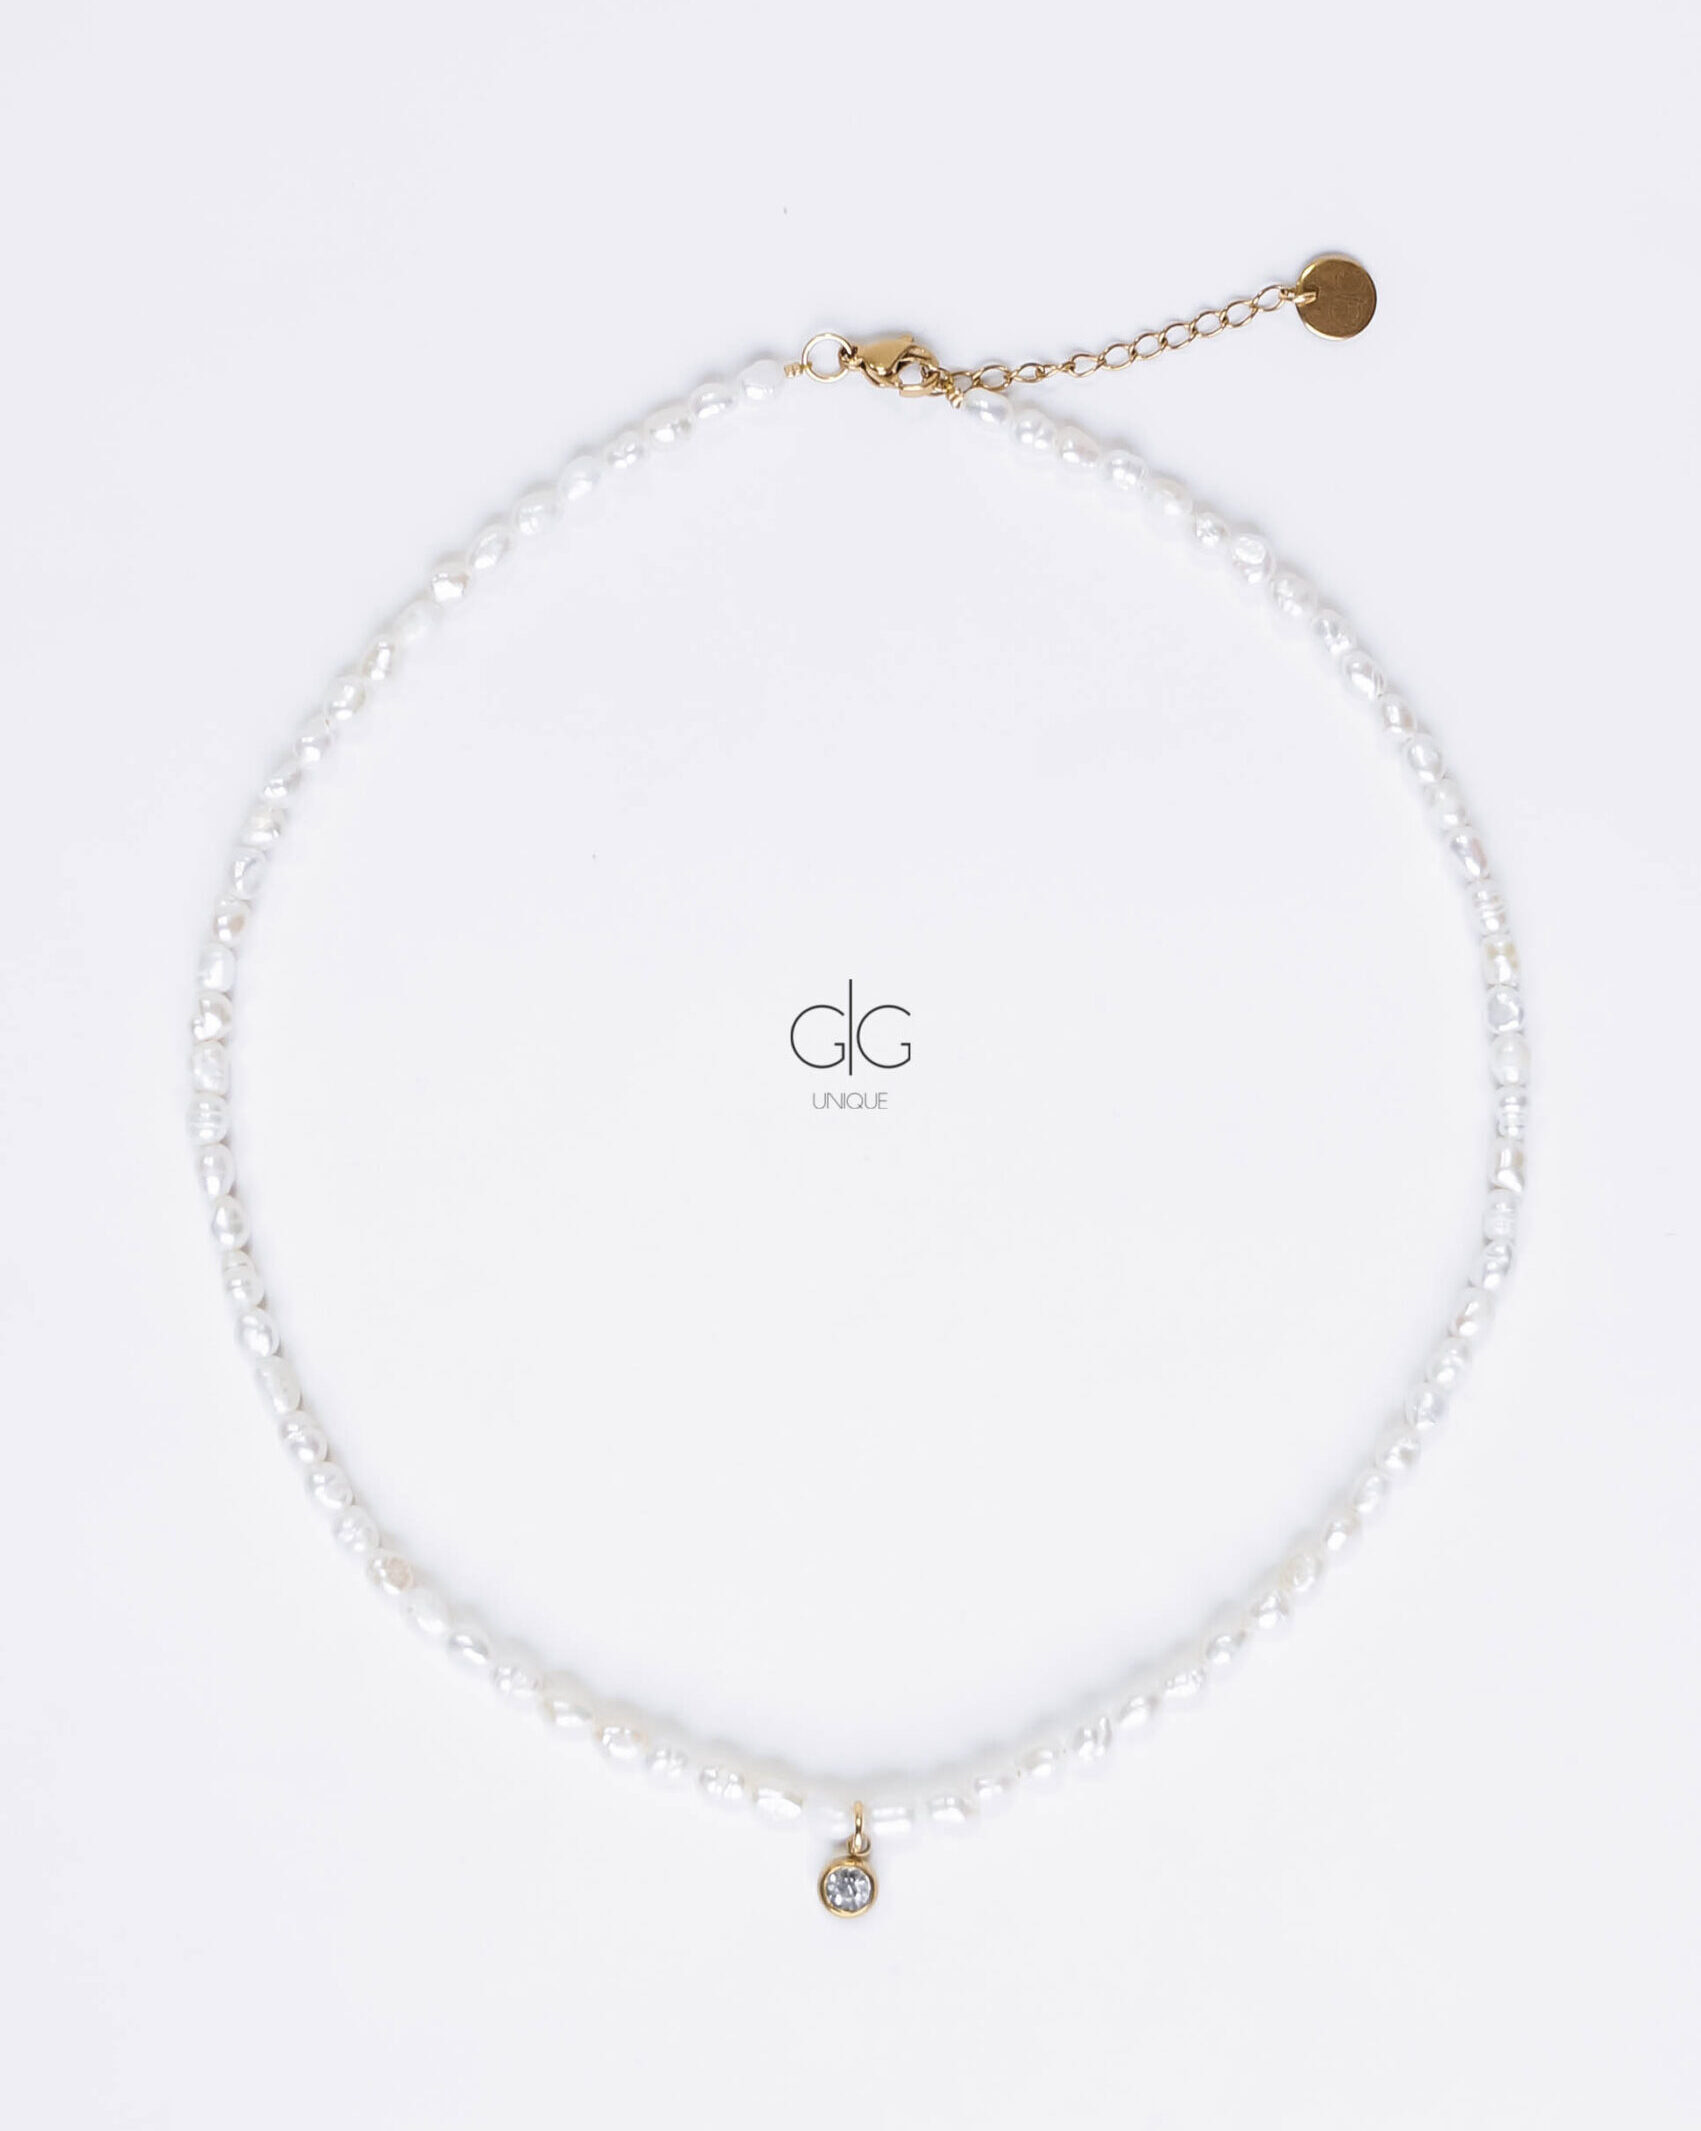 Pearl necklace with mini zircon pendant